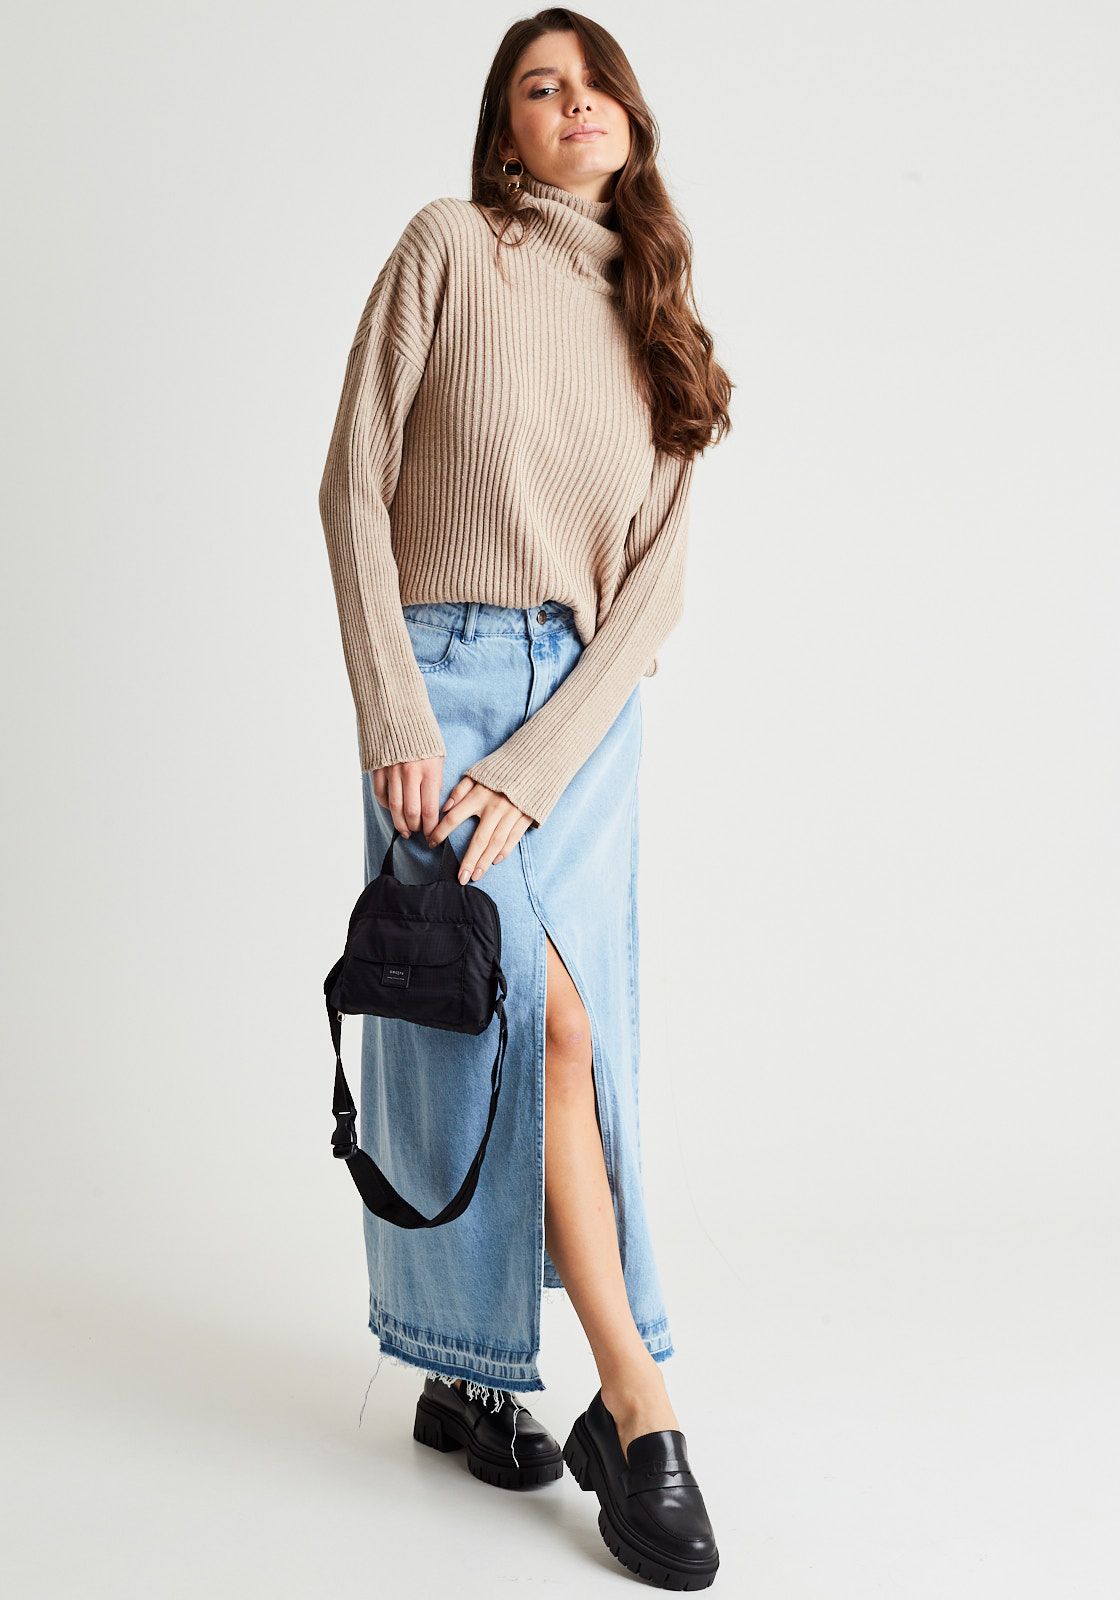 tricot feminino com saia jeans